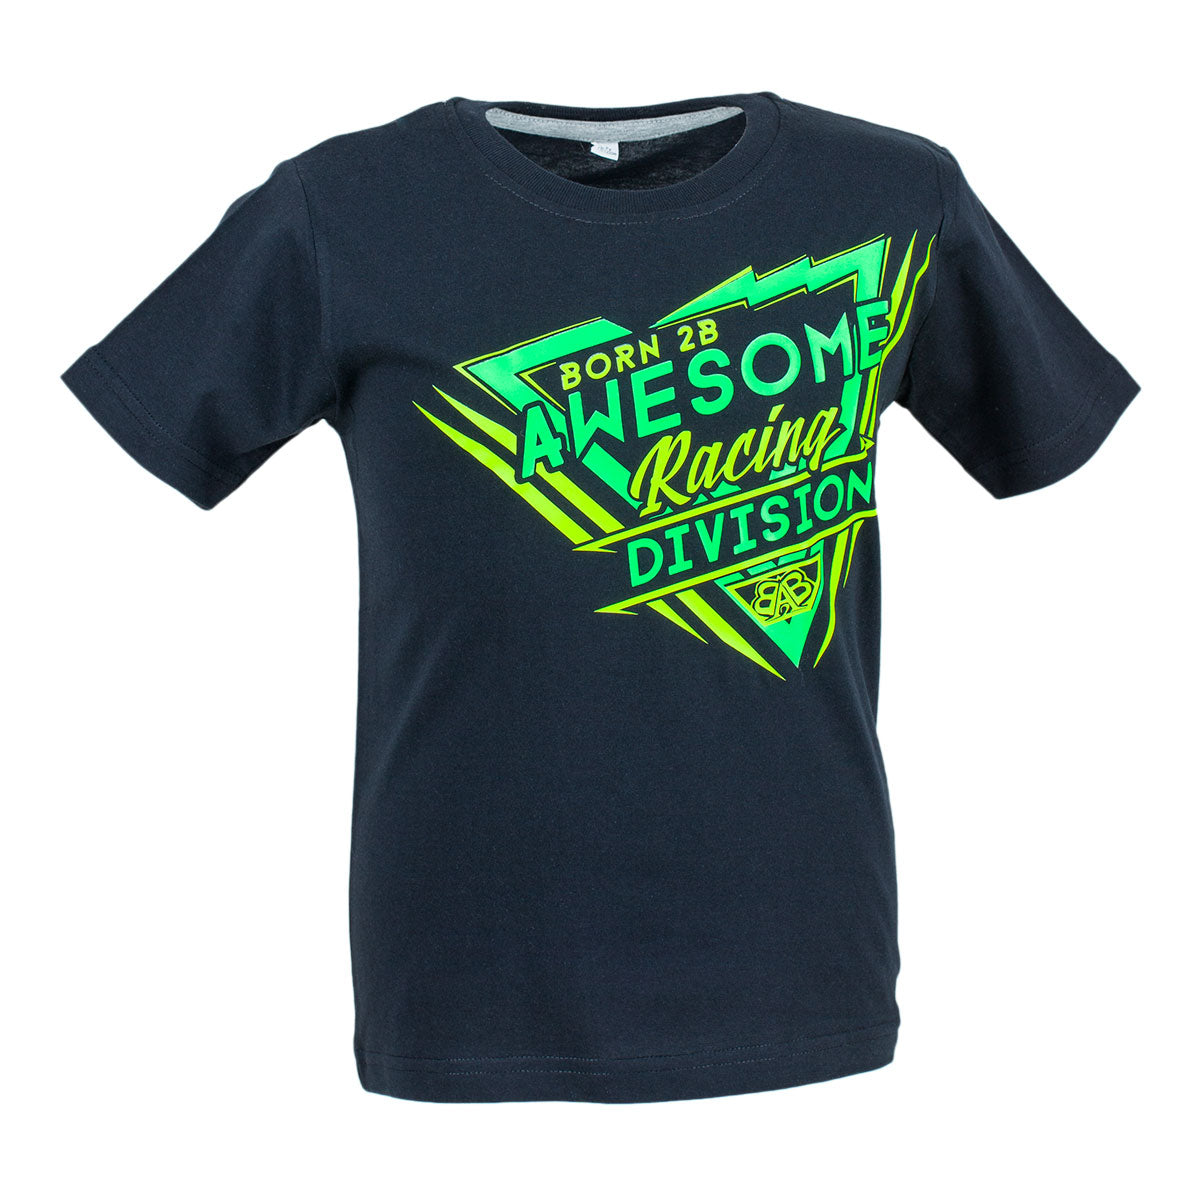 Kids Awesome Racing Division T-Shirt - B2BA Clothing